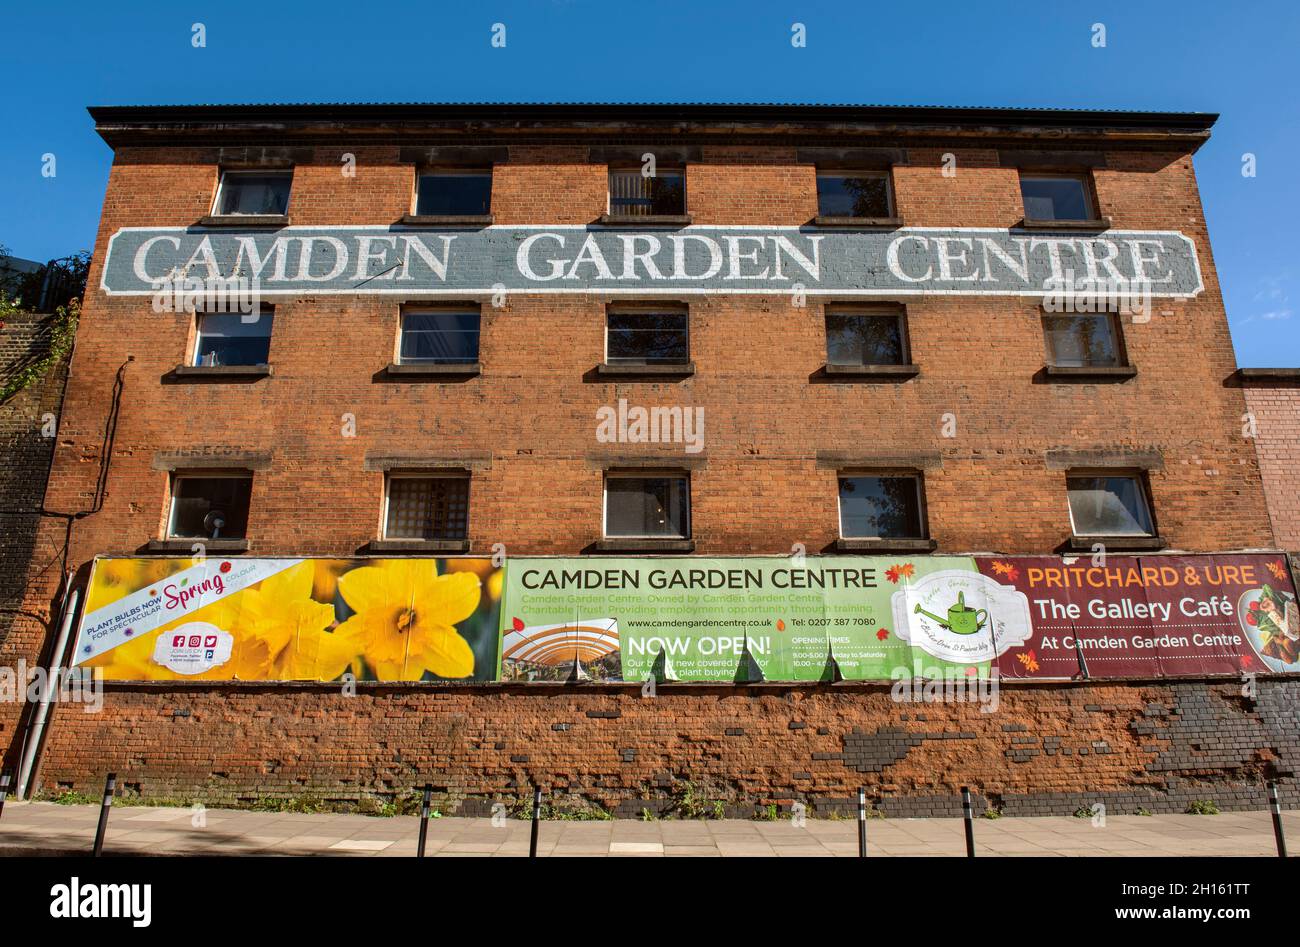 Camden Garden Centre è stato dipinto su un vecchio edificio in mattoni, London Borough of Camden England Britain UK Foto Stock